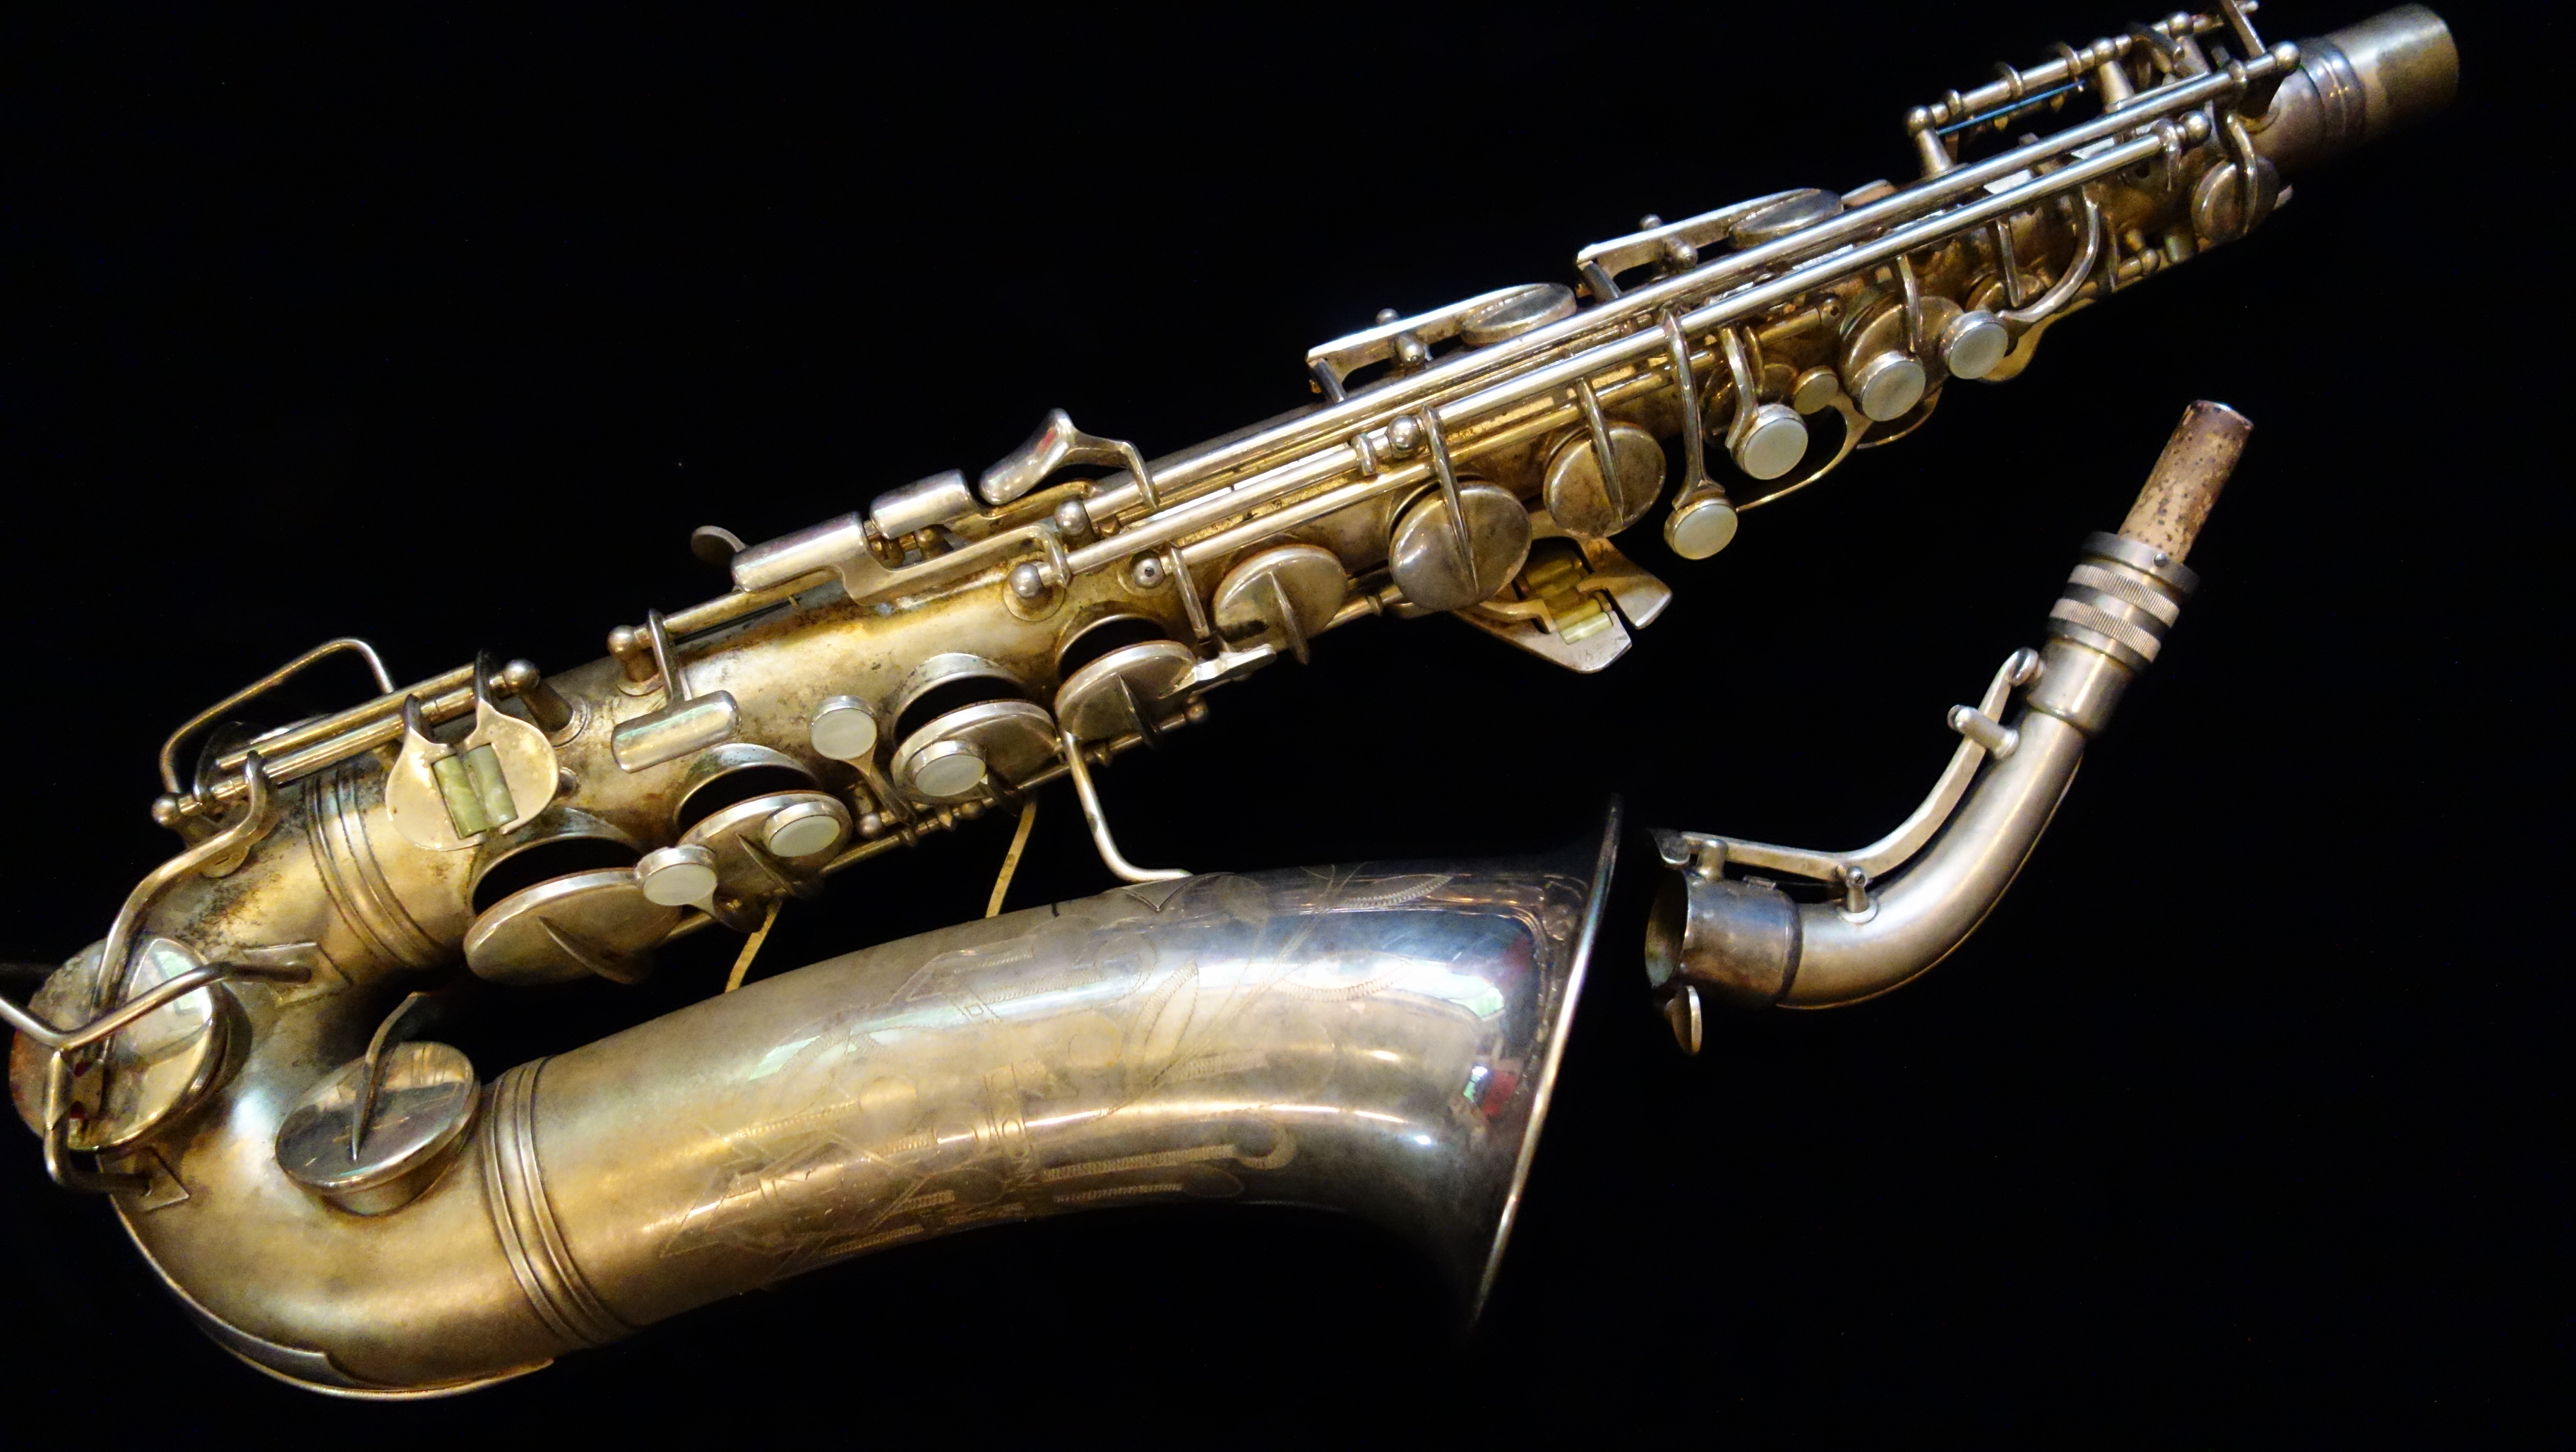 Dating selmer saxophones